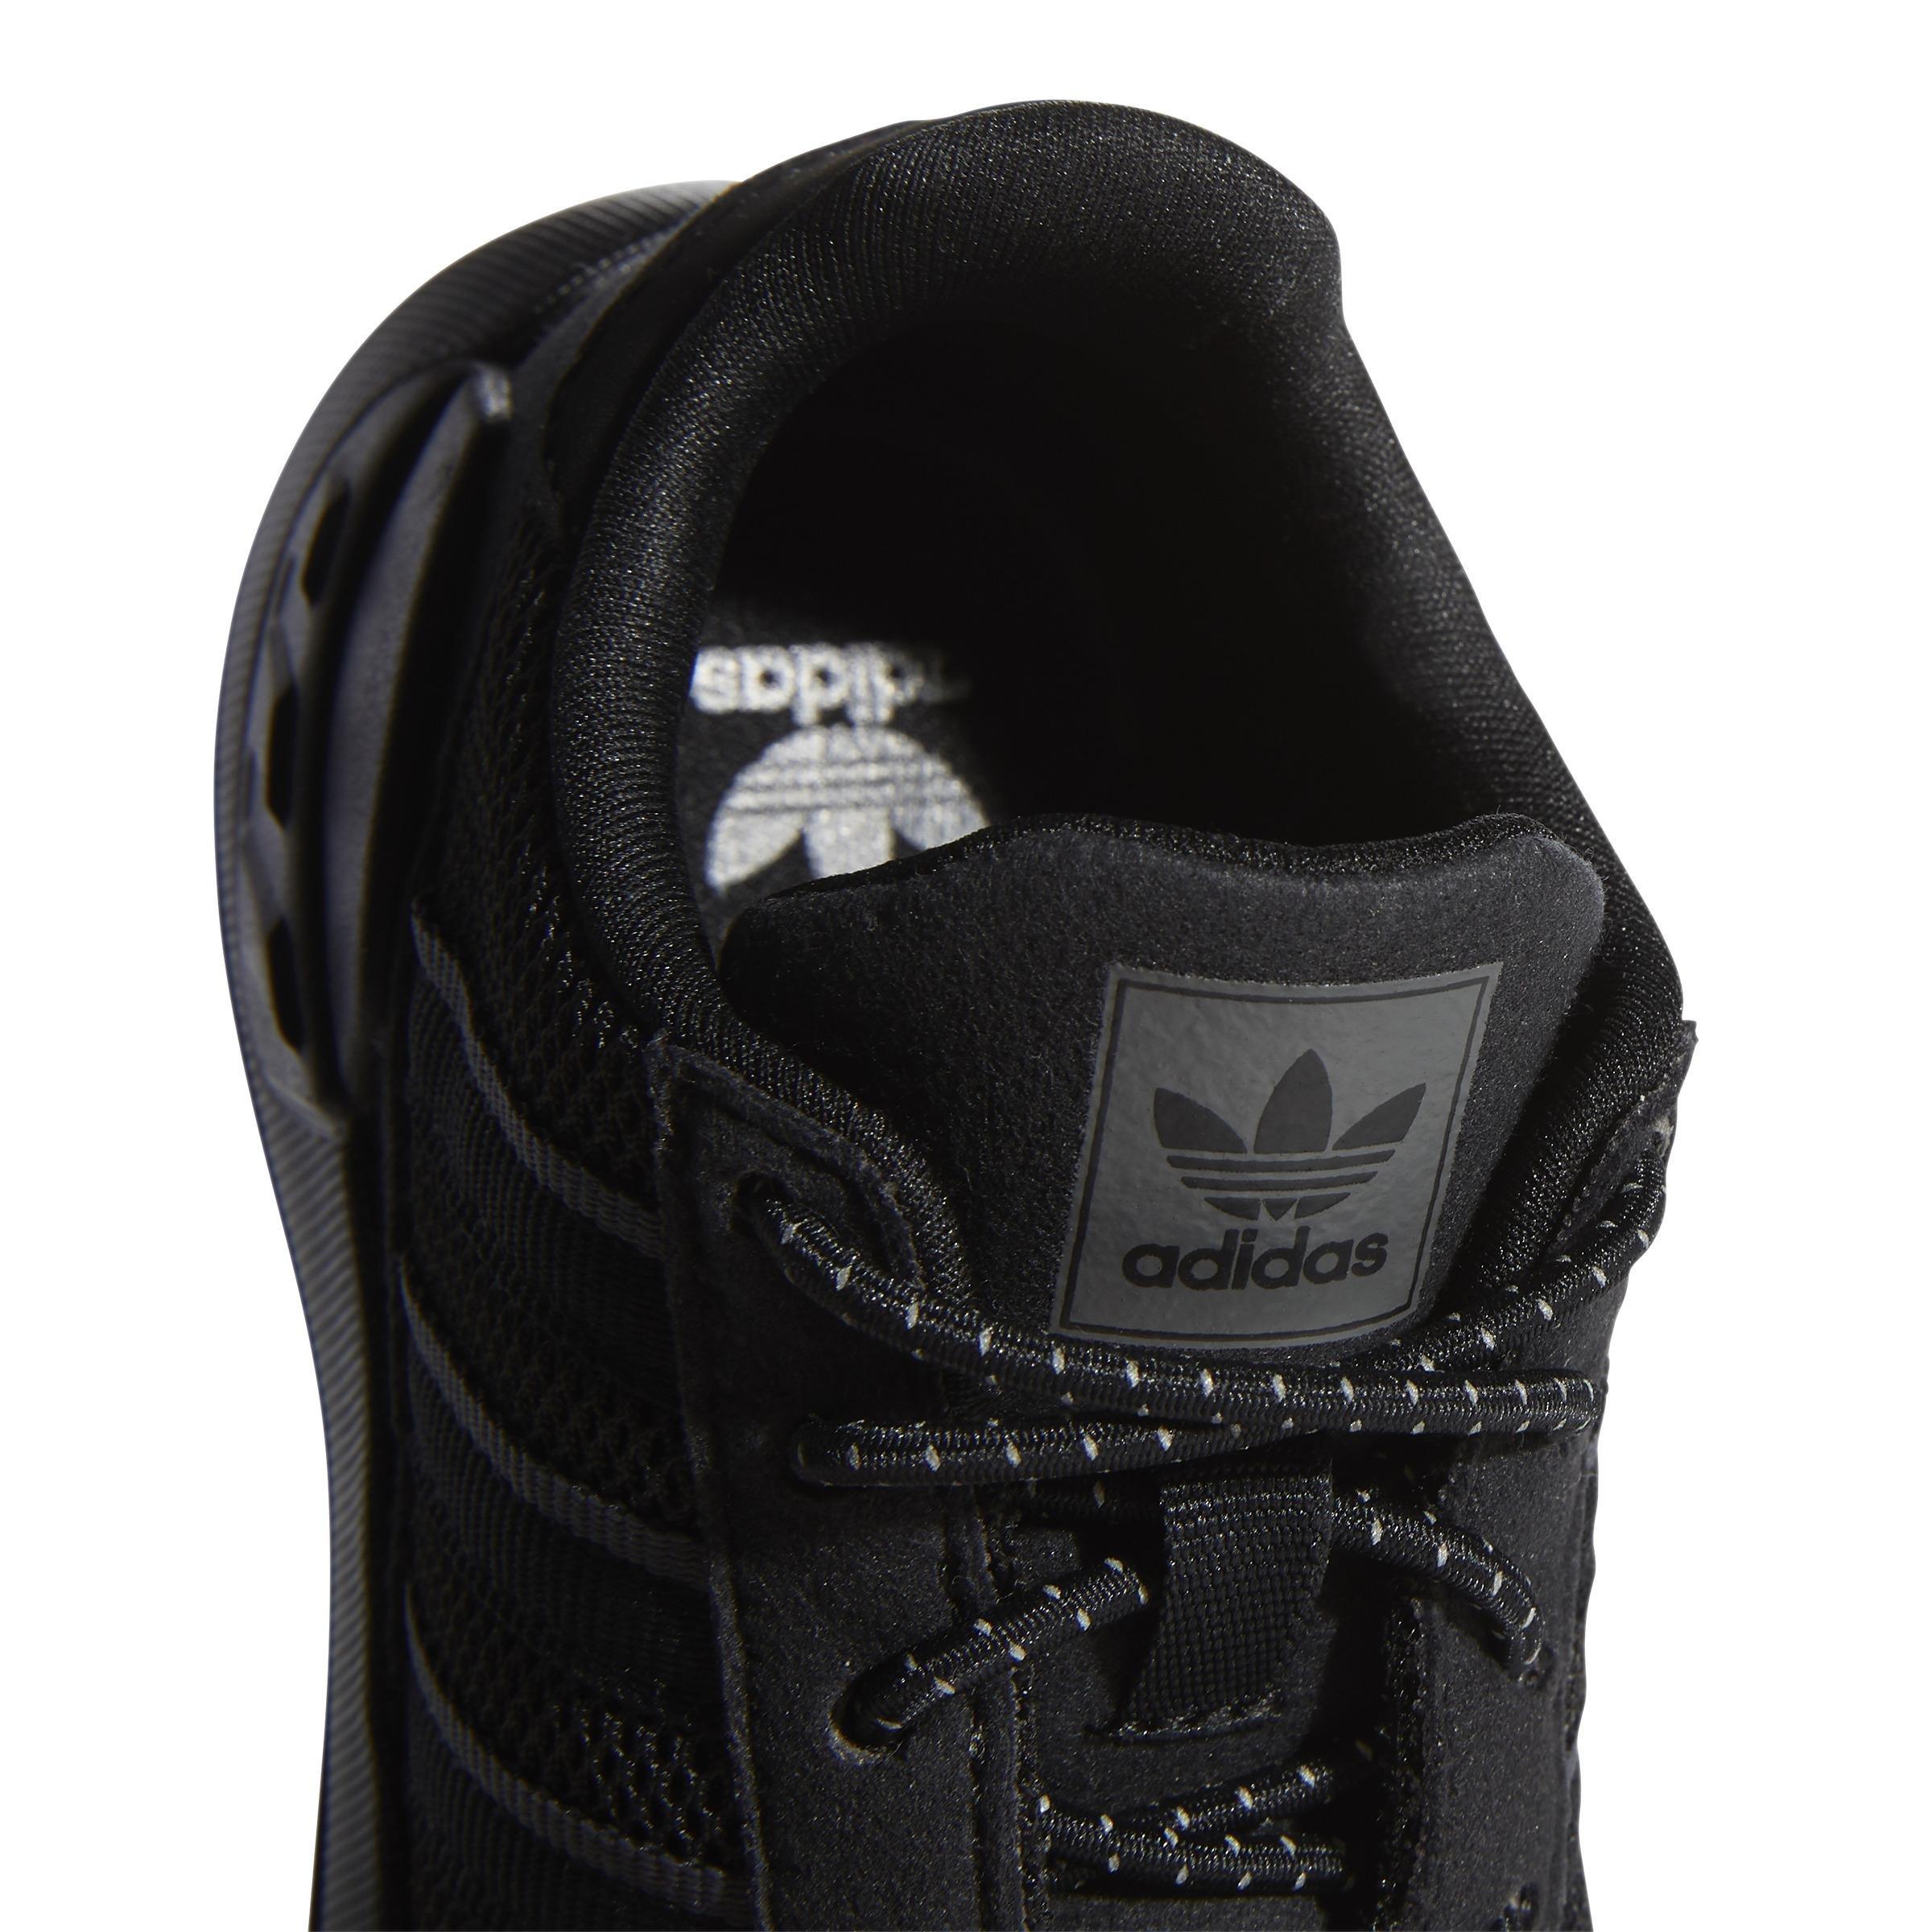 Kids Unisex La Trainer Lite Shoes, Black, A901_ONE, large image number 3